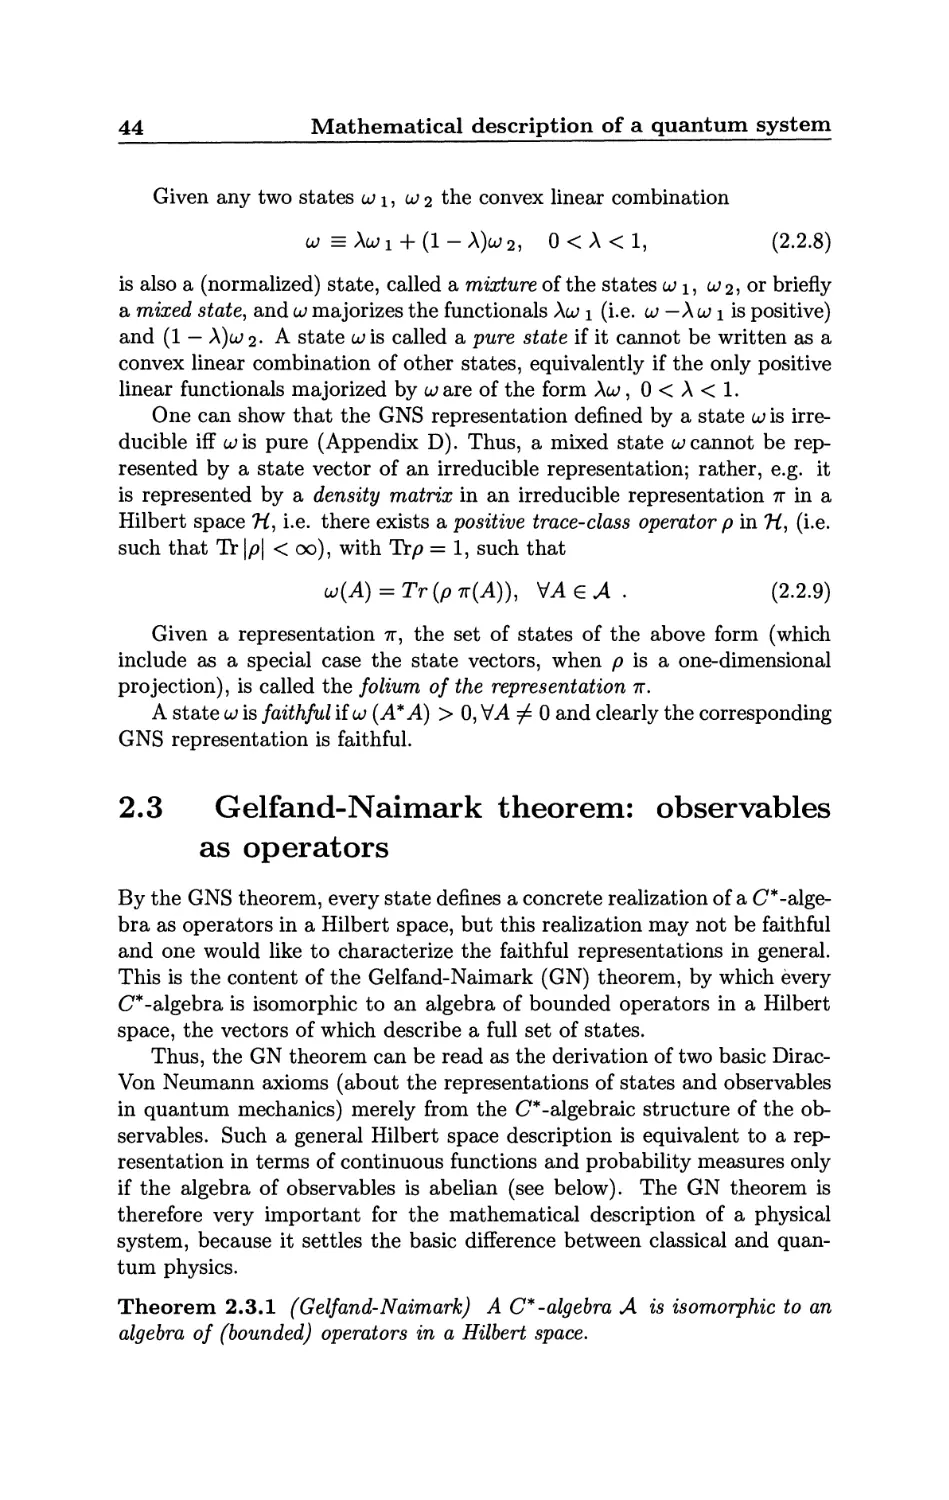 2.3 Gelfand-Naimark theorem: observables as operators